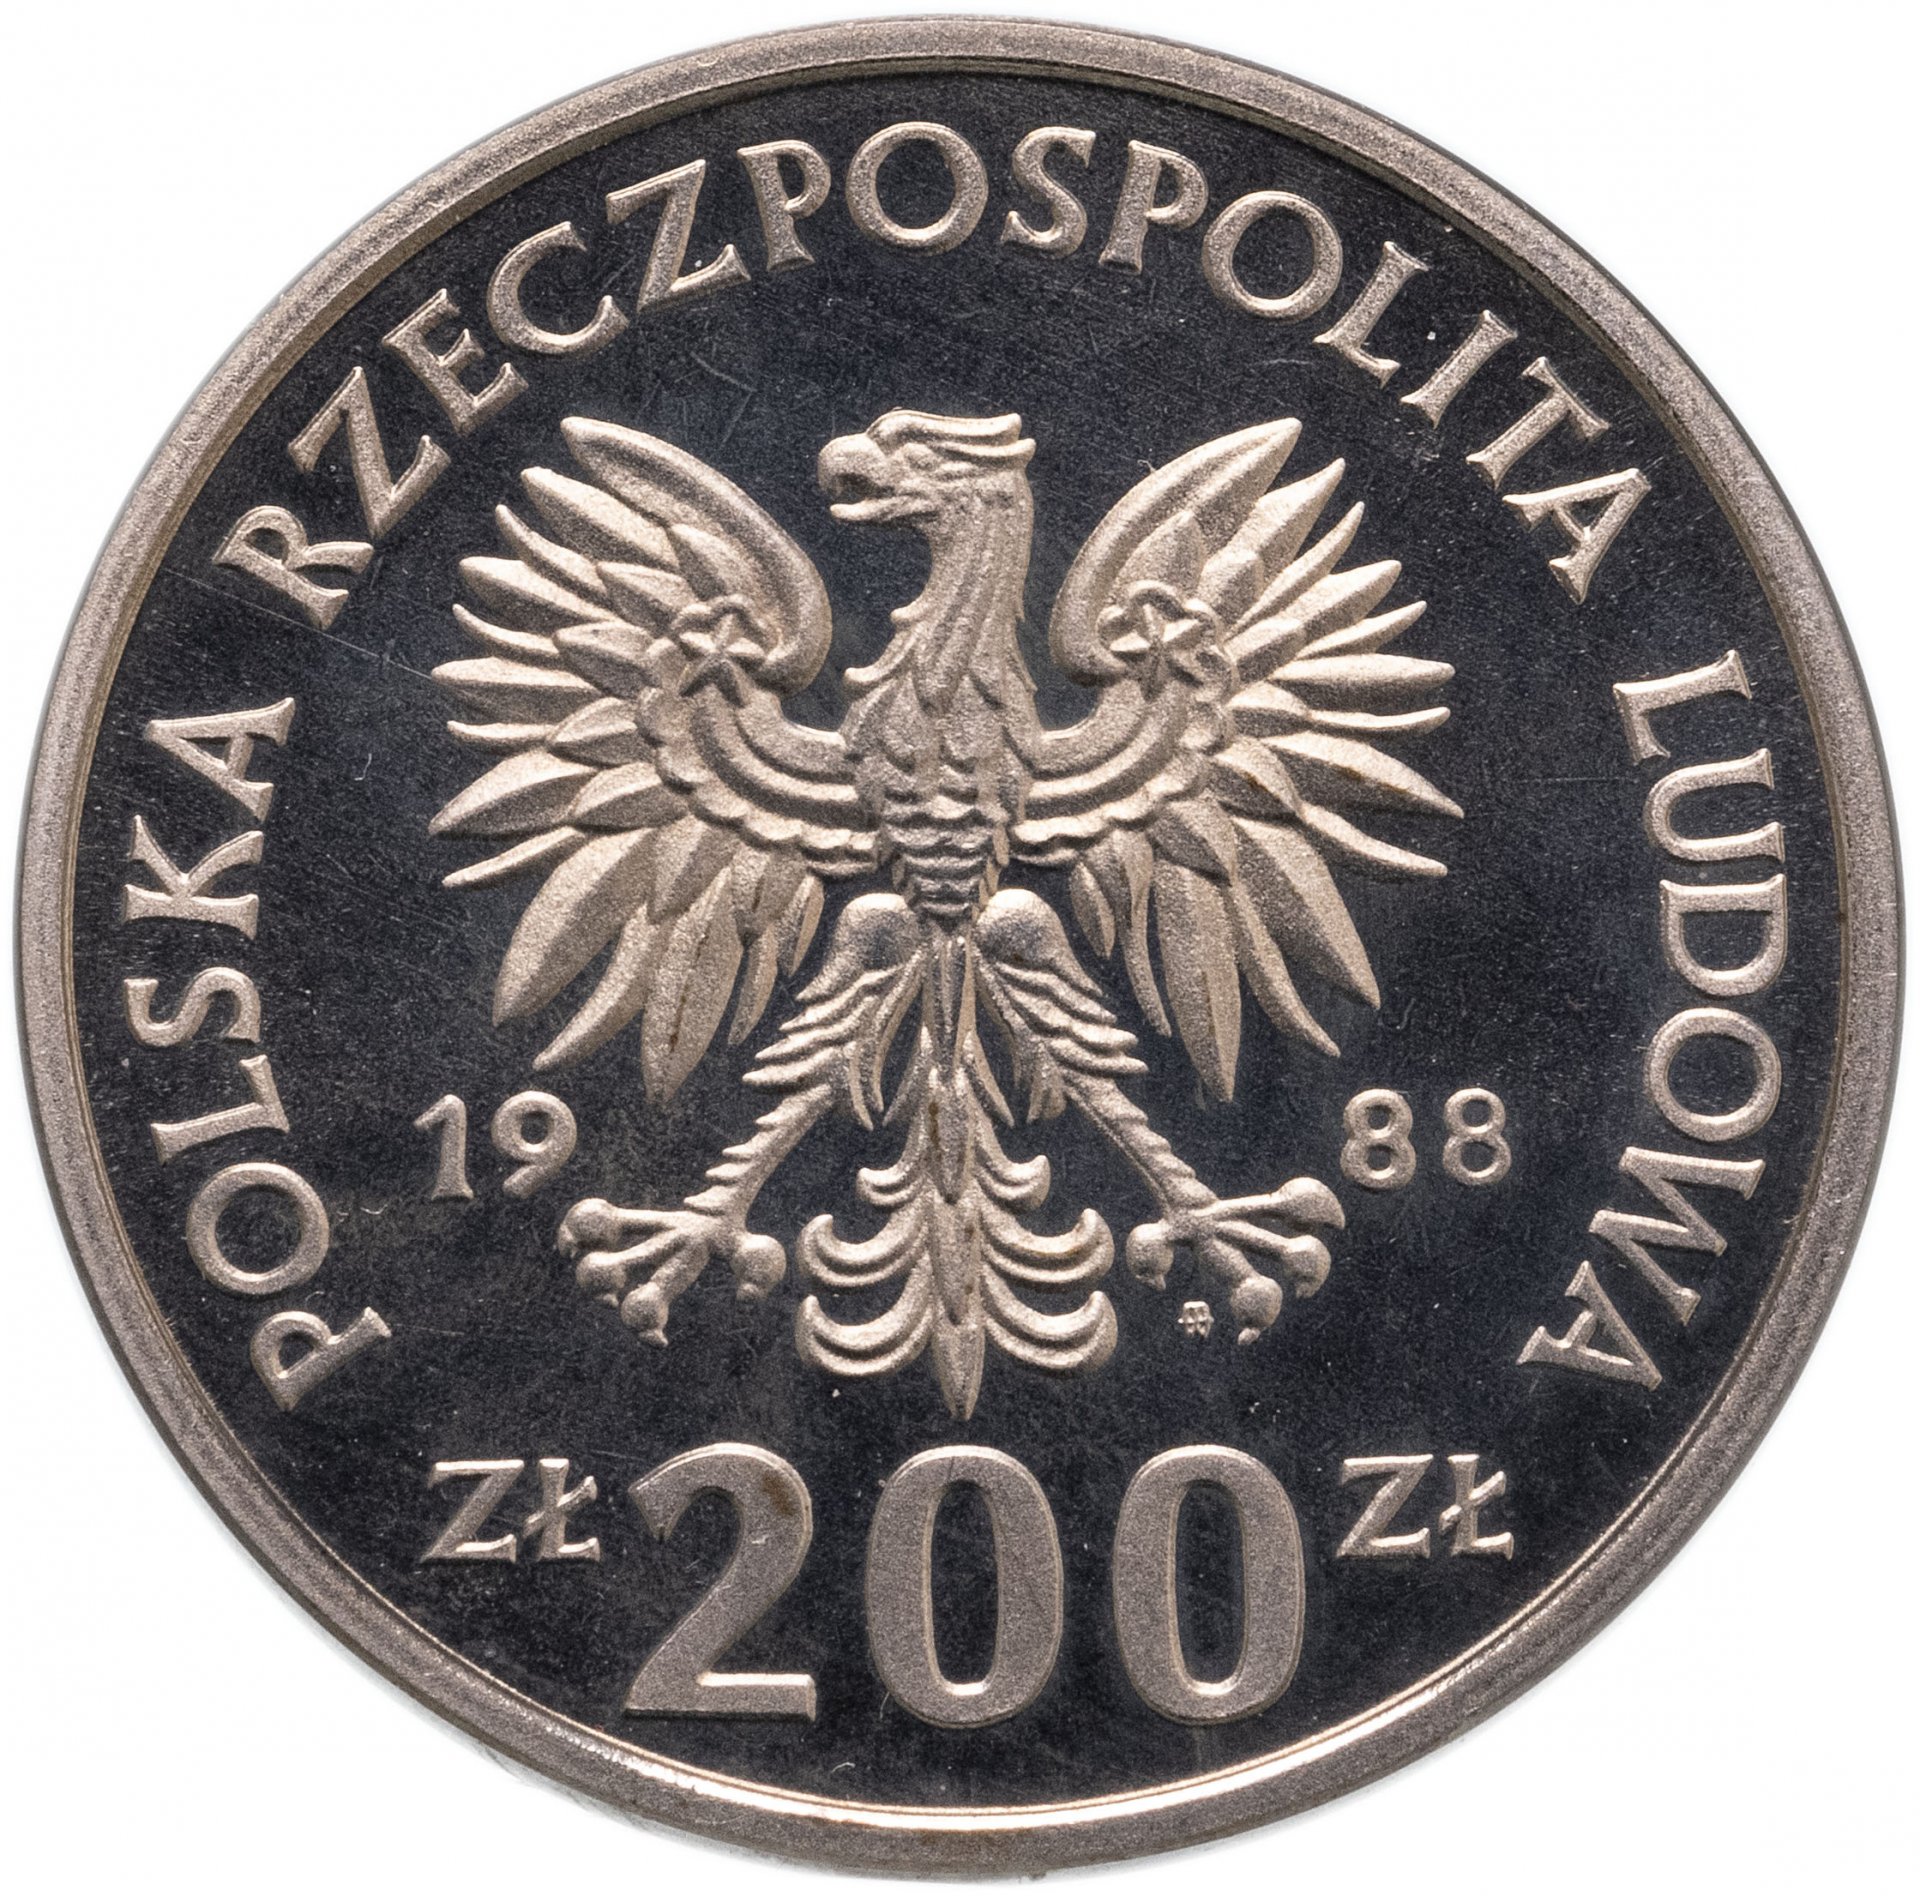 5000 злотых в рублях. 1000 Злотых Польша. 200 Zlotych. 500 Zlotych. Монета Польши 100 злотых 1985г.